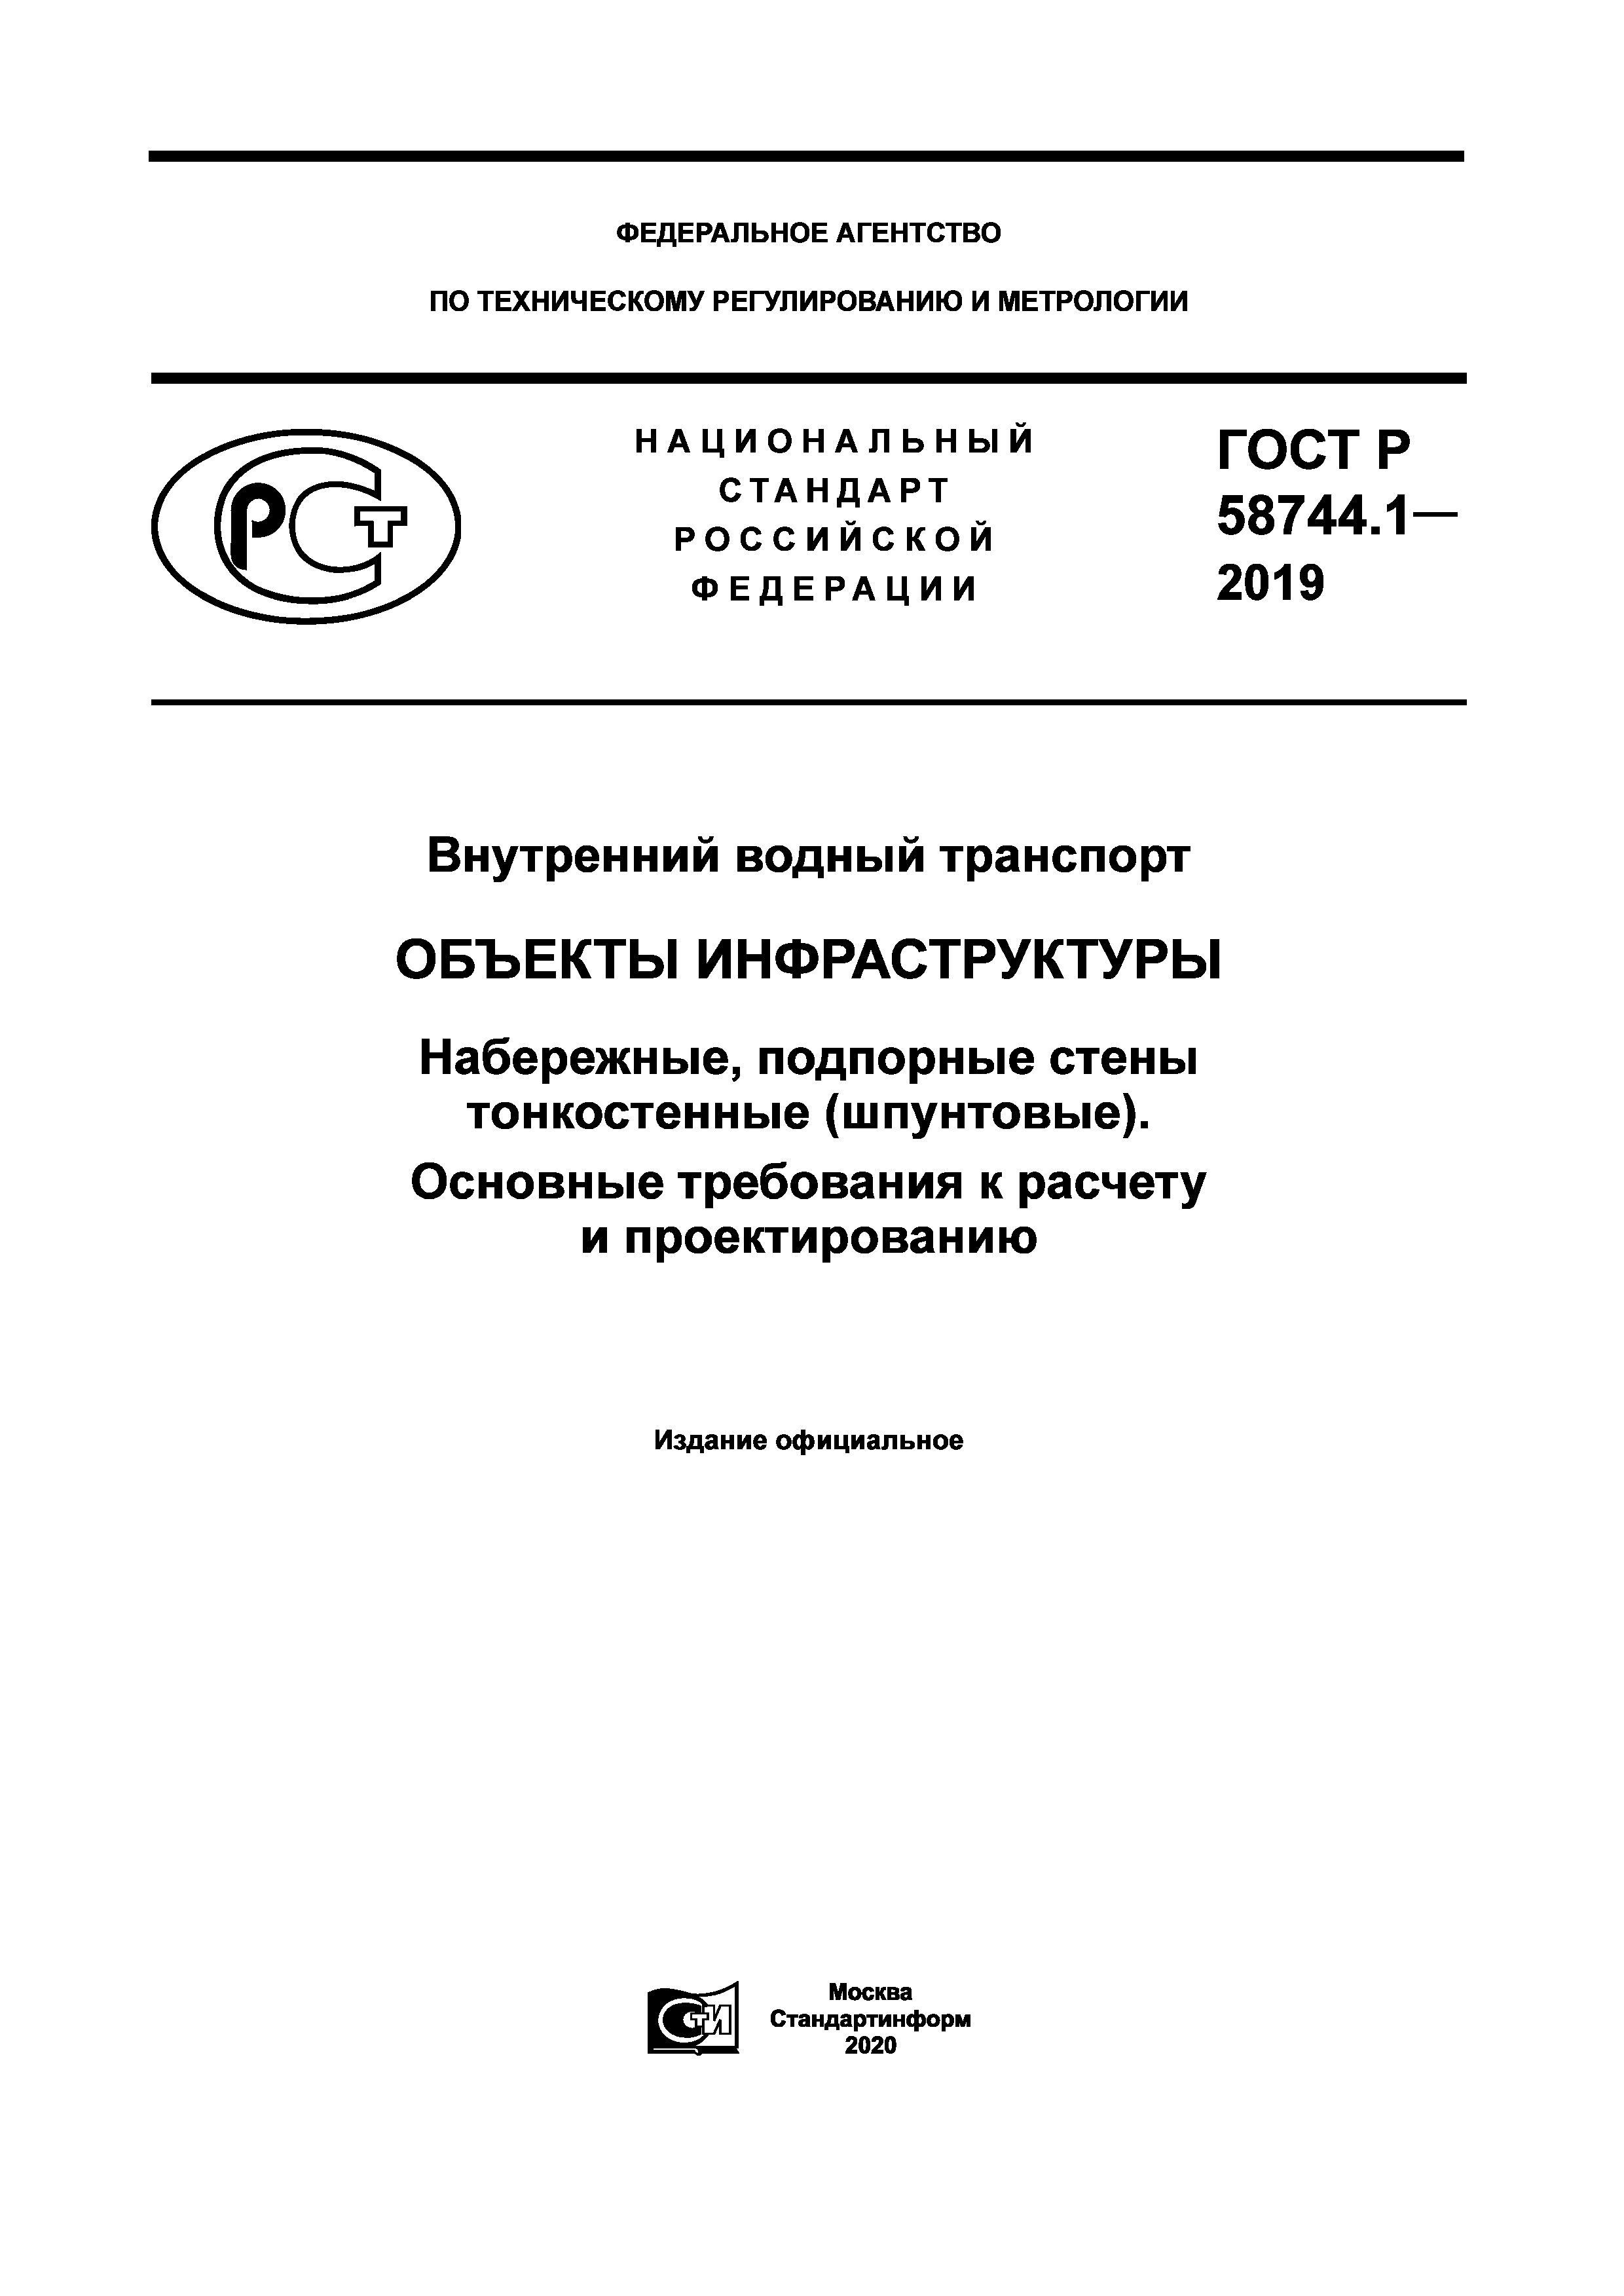 ГОСТ Р 58744.1-2019